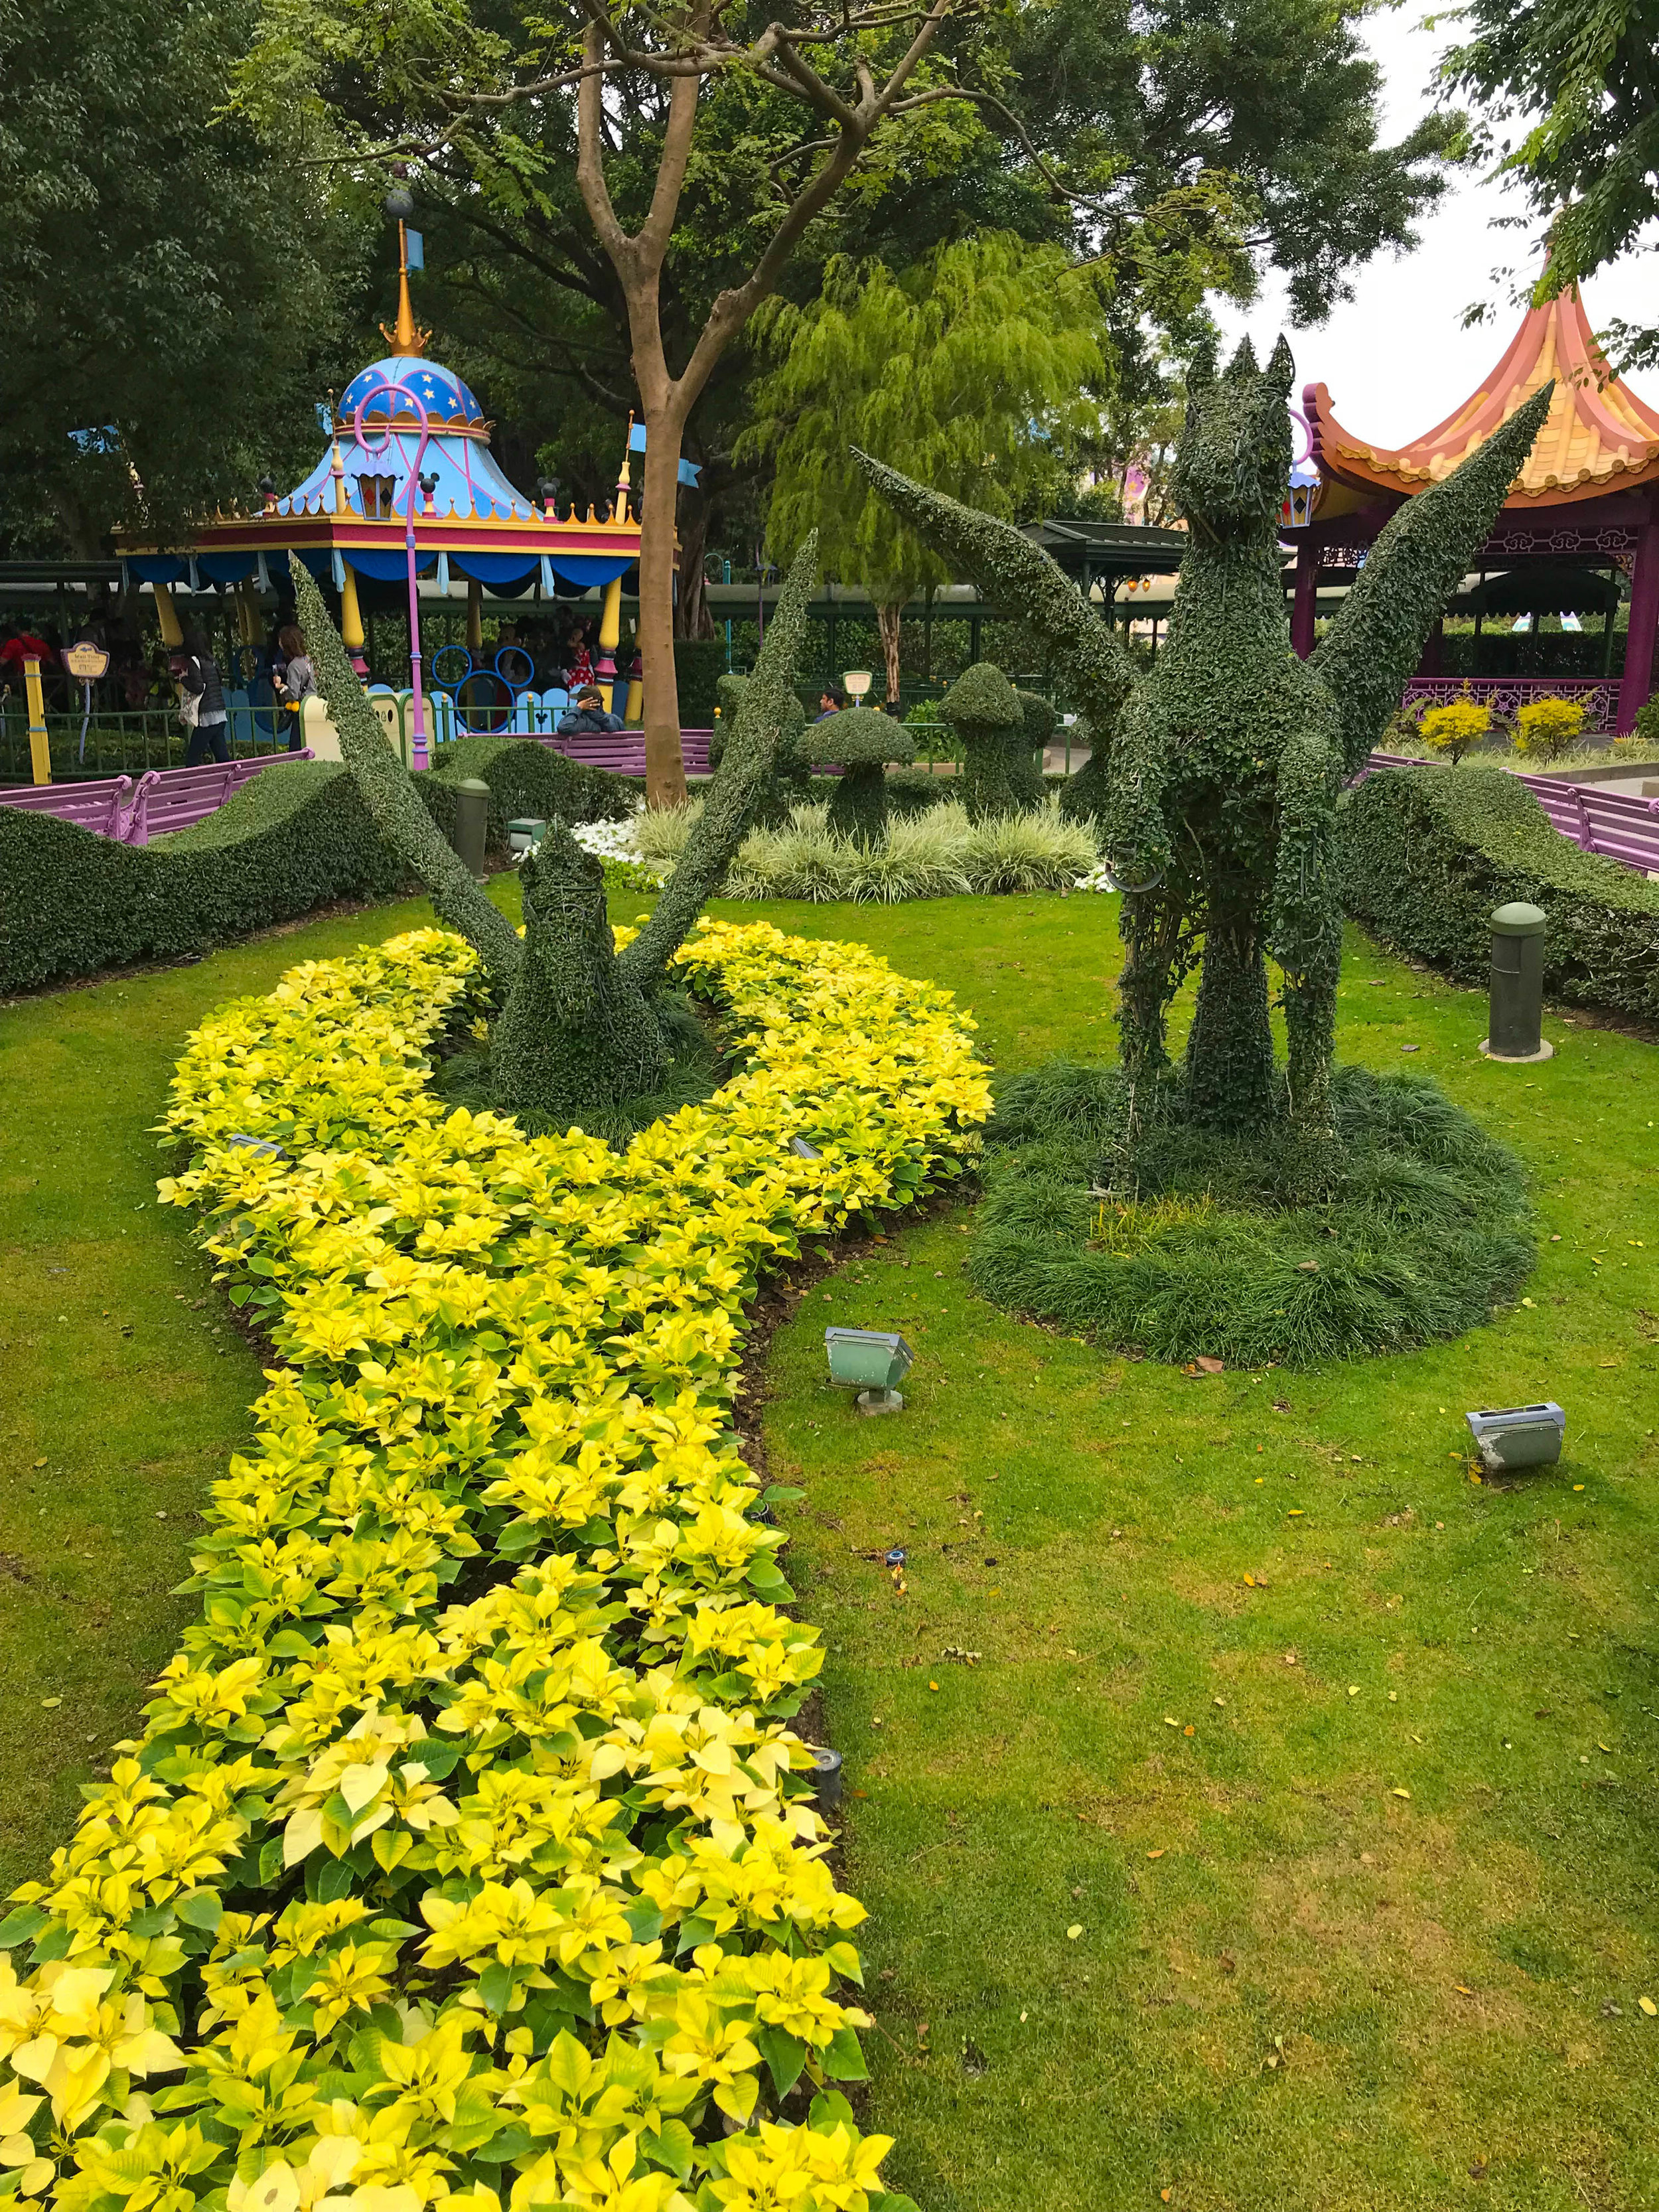 Hong Kong Disneyland - Fantasia Garden